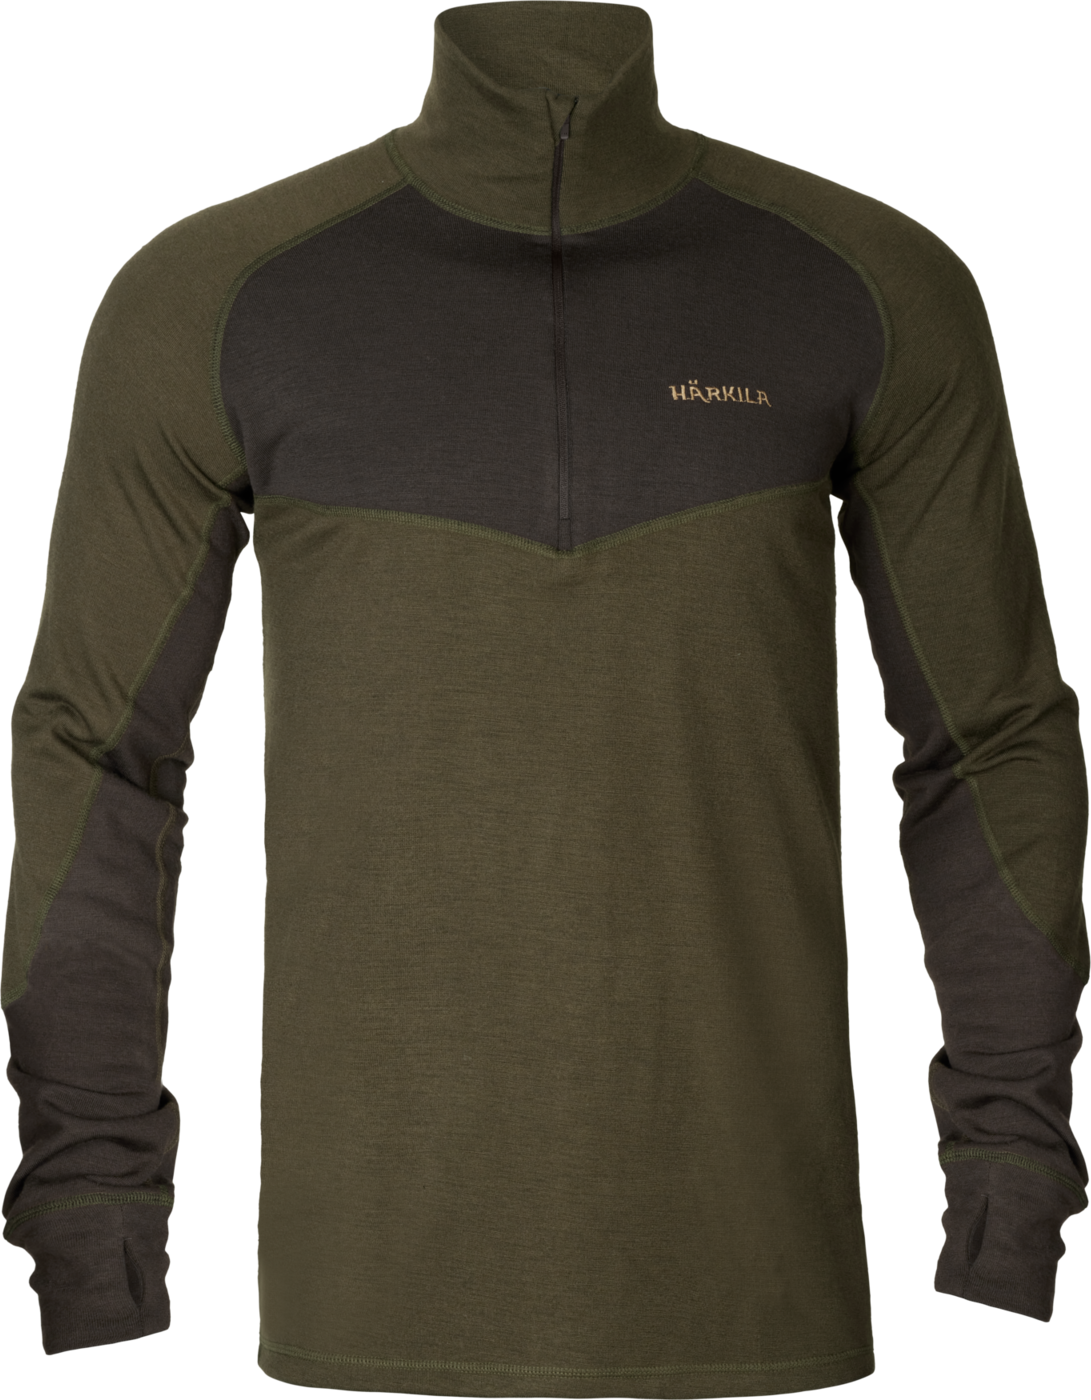 Men's Base Warm Baselayer Shirt Willow green/Shadow brown